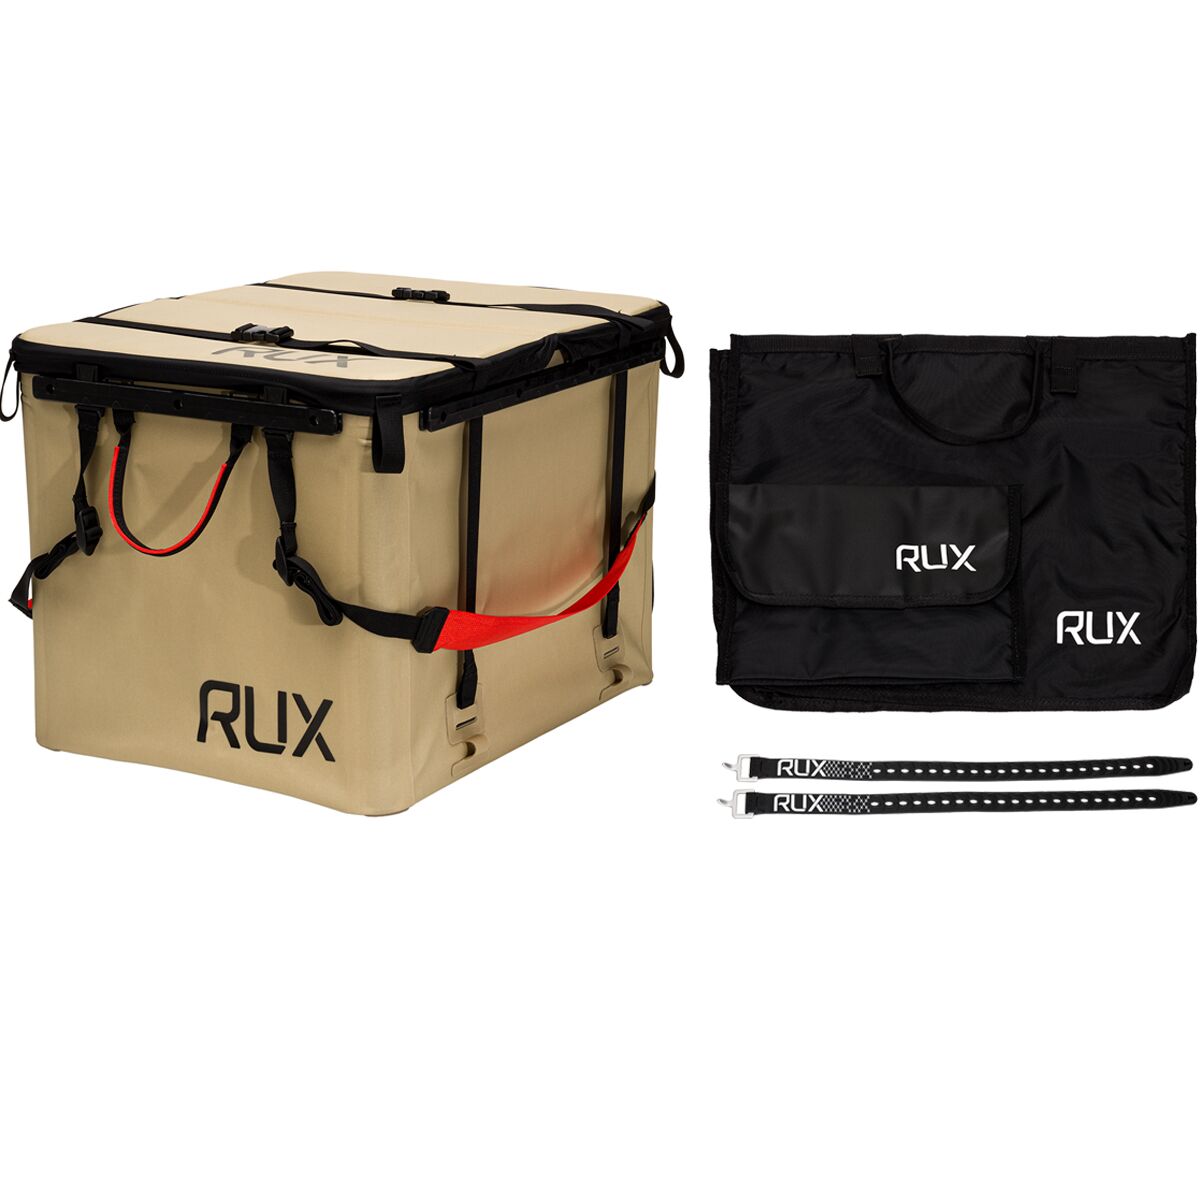 Rux RUX 70 + Accessory Bundle